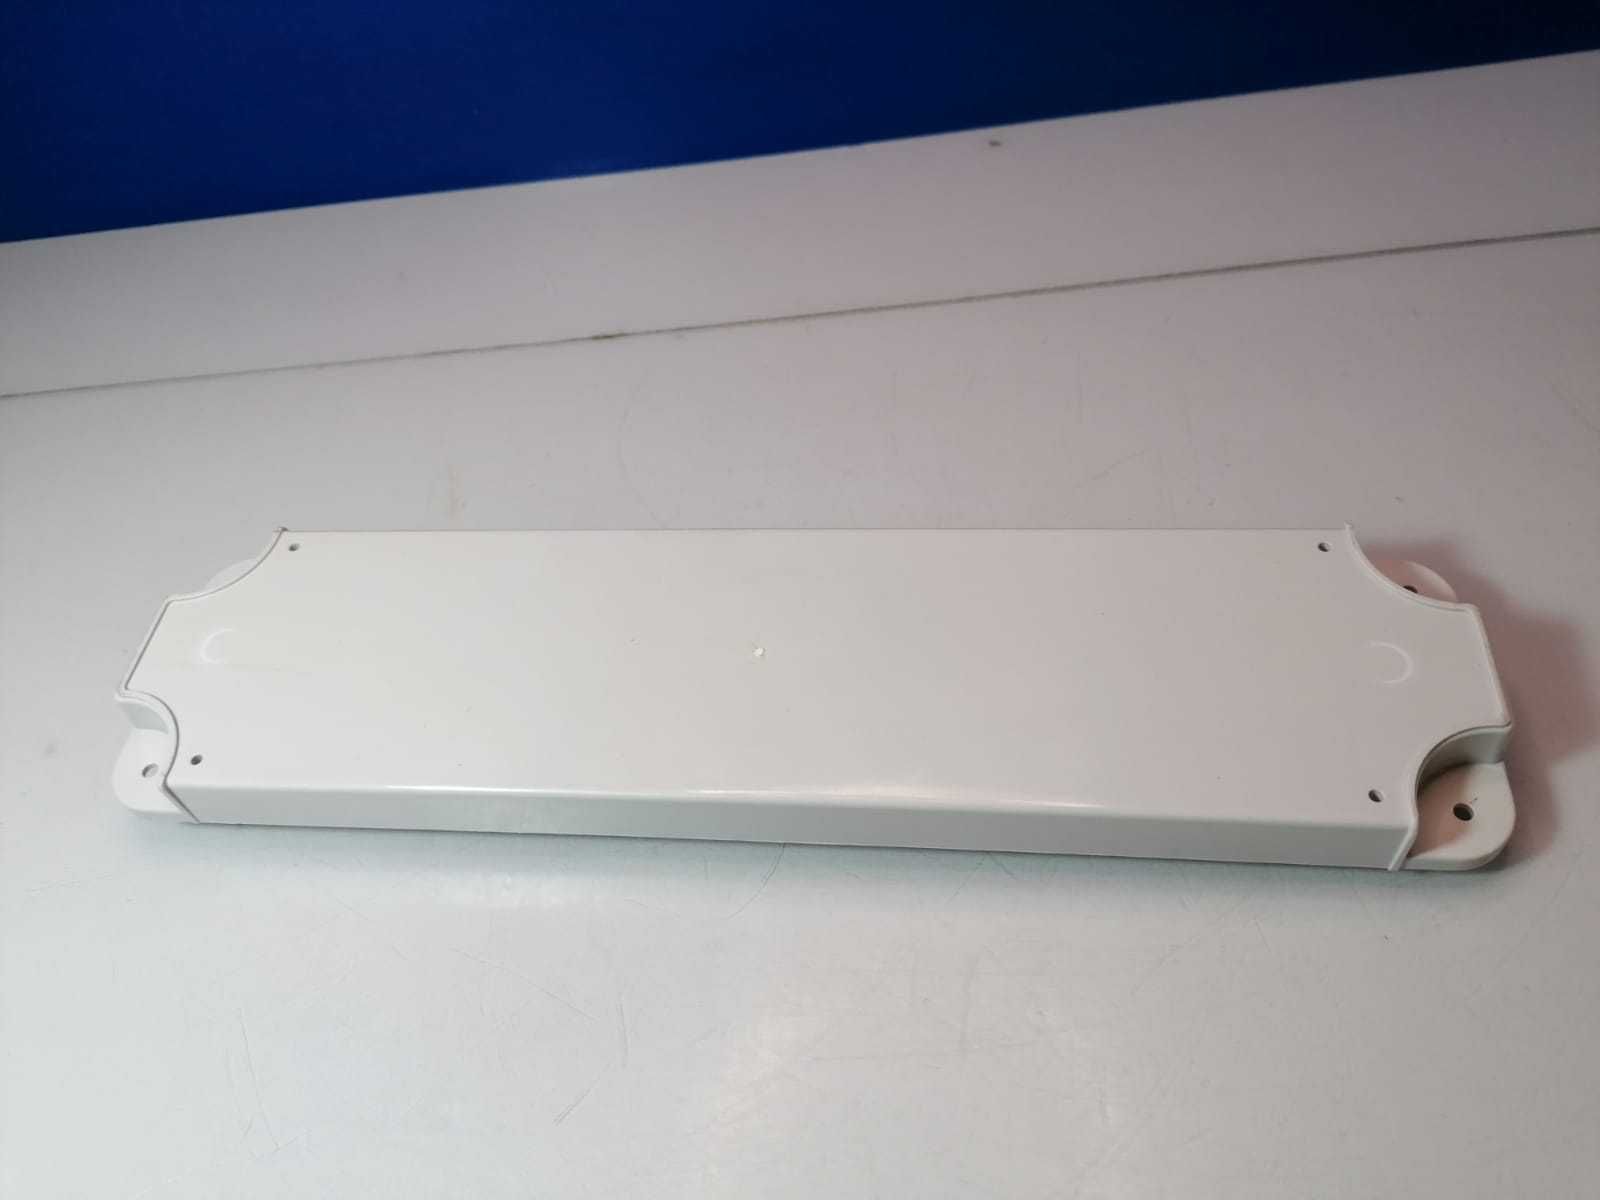 Modul electronic aparate frigorifice Sharp , producator Vestel